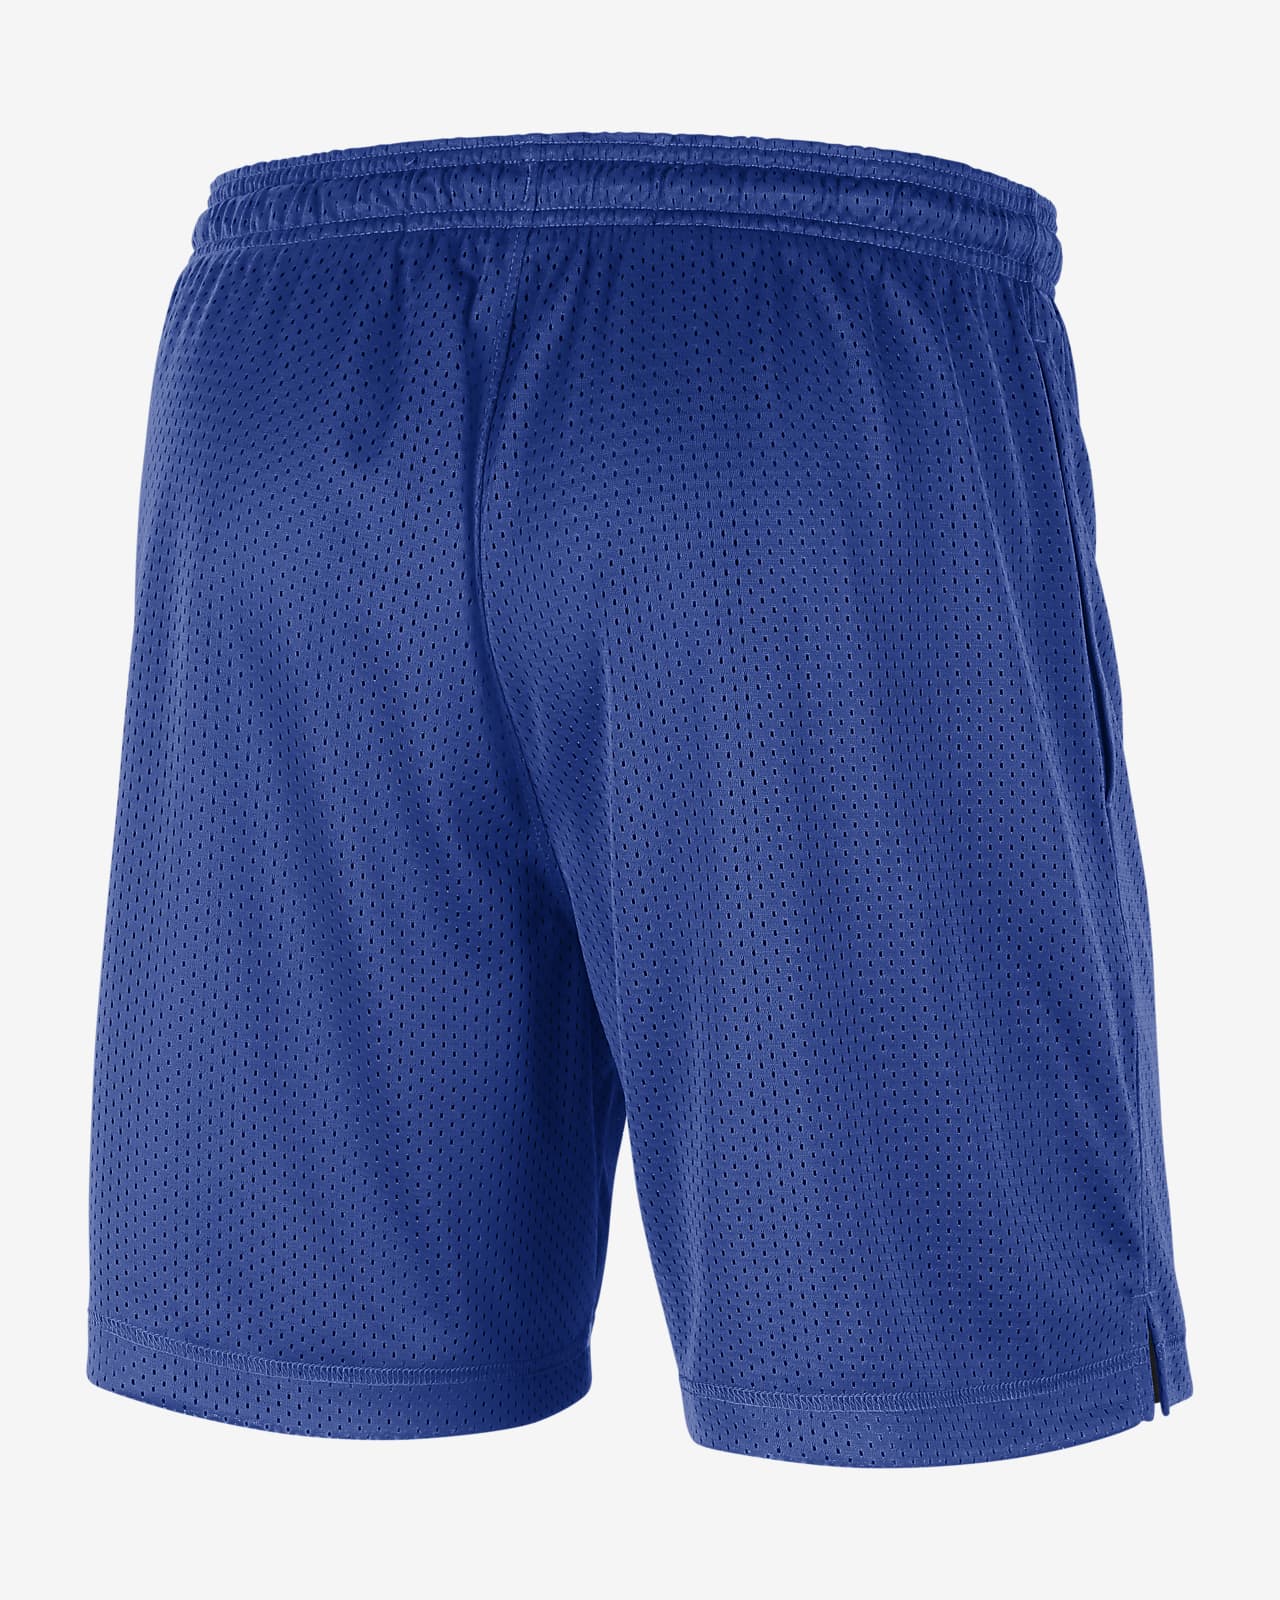 Warriors Standard Issue Men's Nike NBA Reversible Shorts.